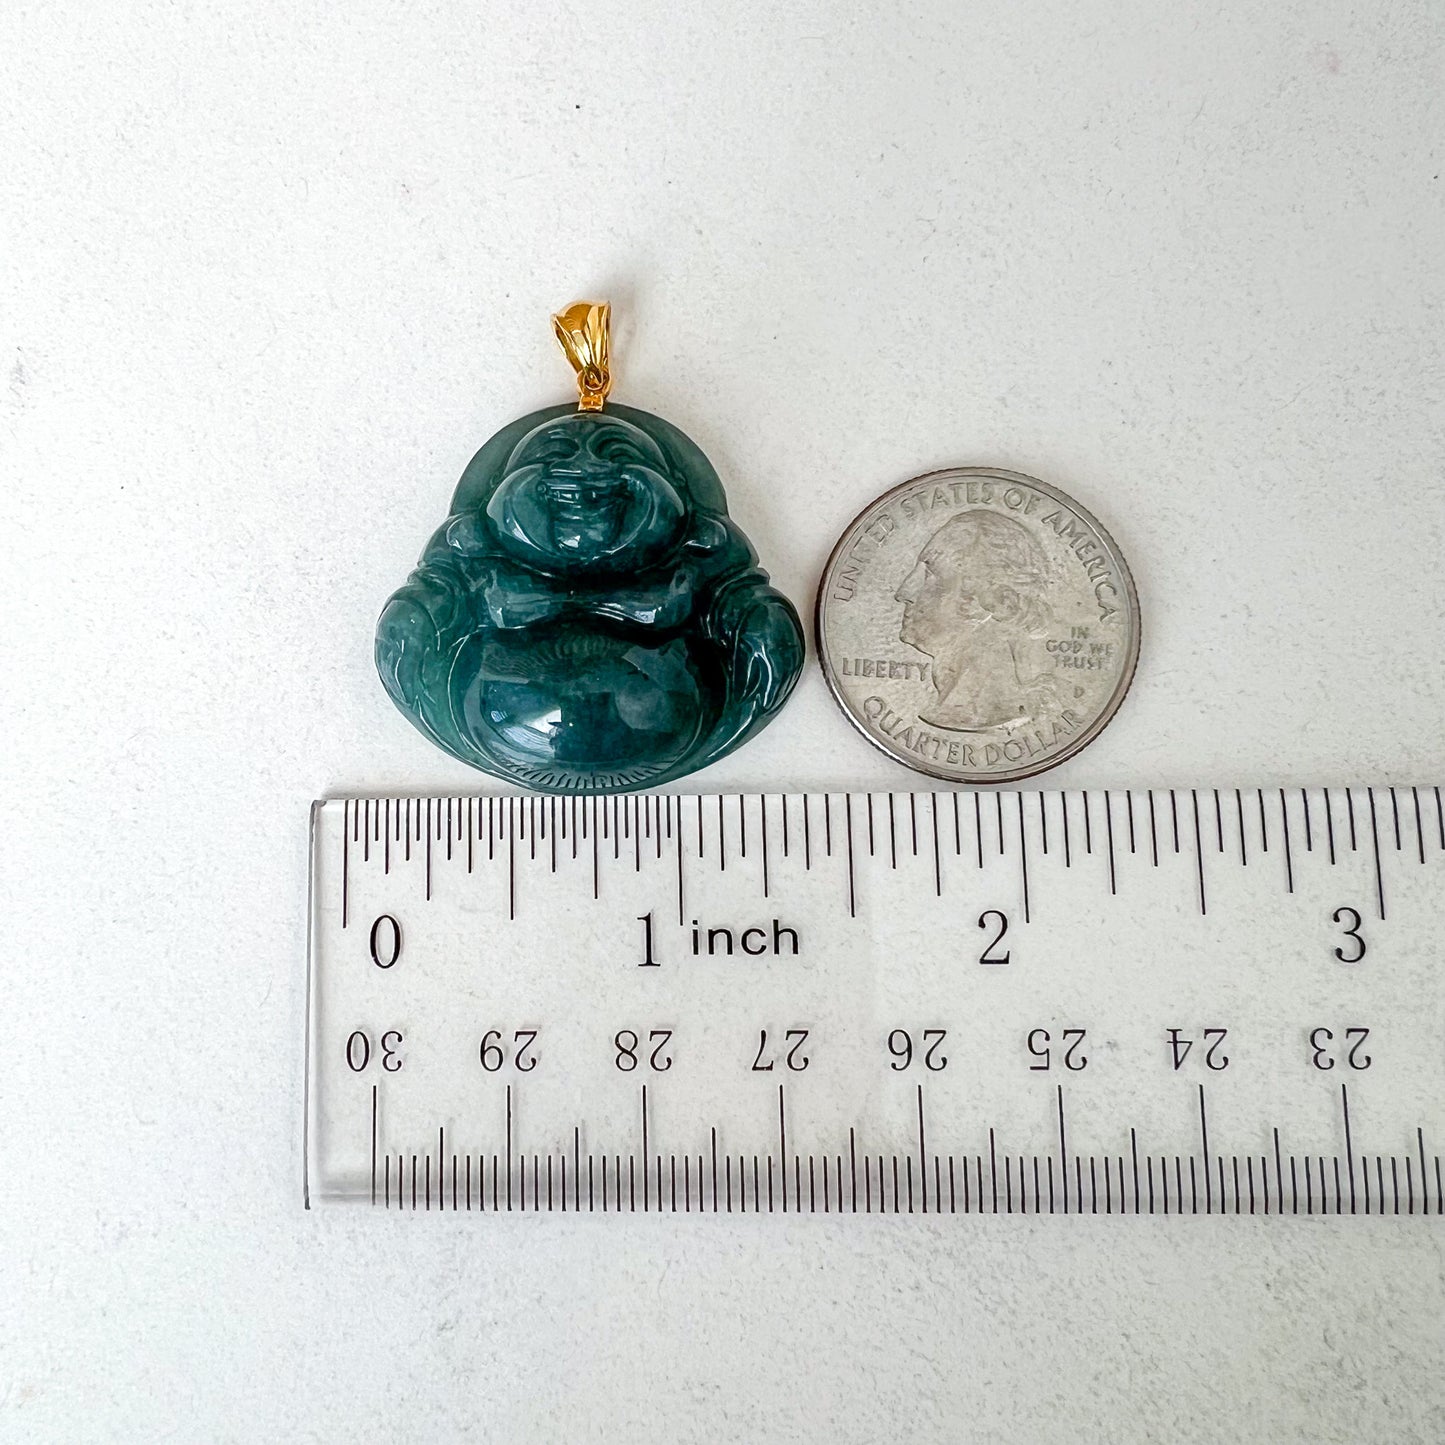 Blue Green Happy Buddha Jadeite Jade with 18K Solid Gold Pendant, NY-0723-1703382283